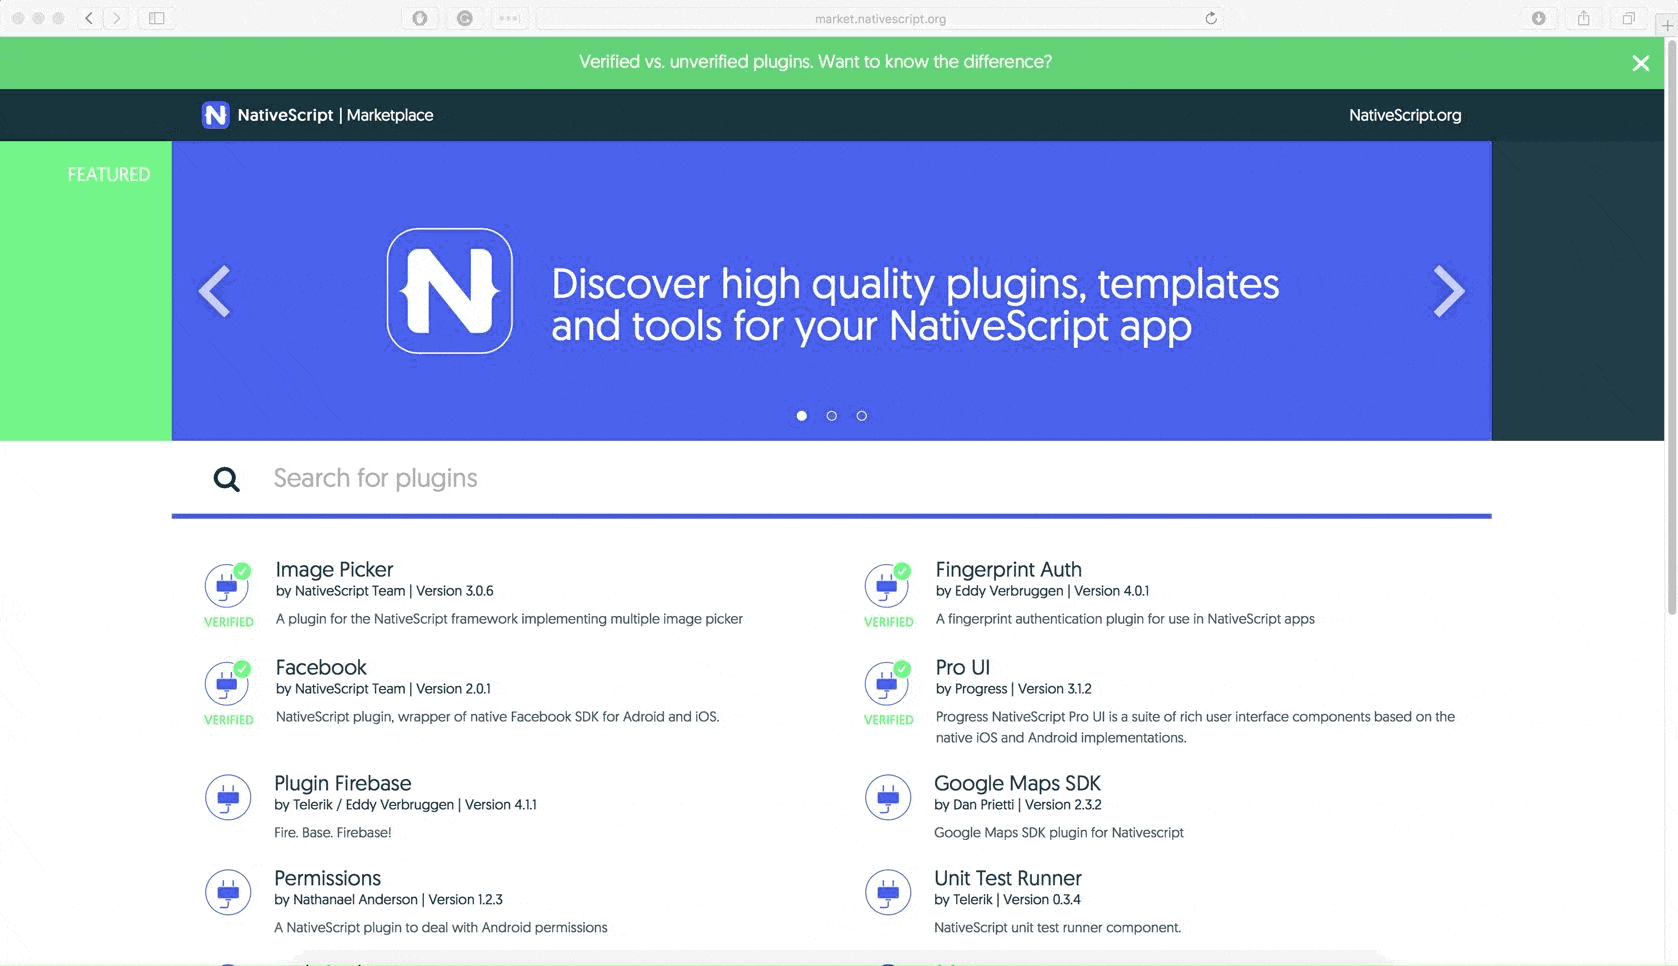 nativescript plugins marketplace instant search